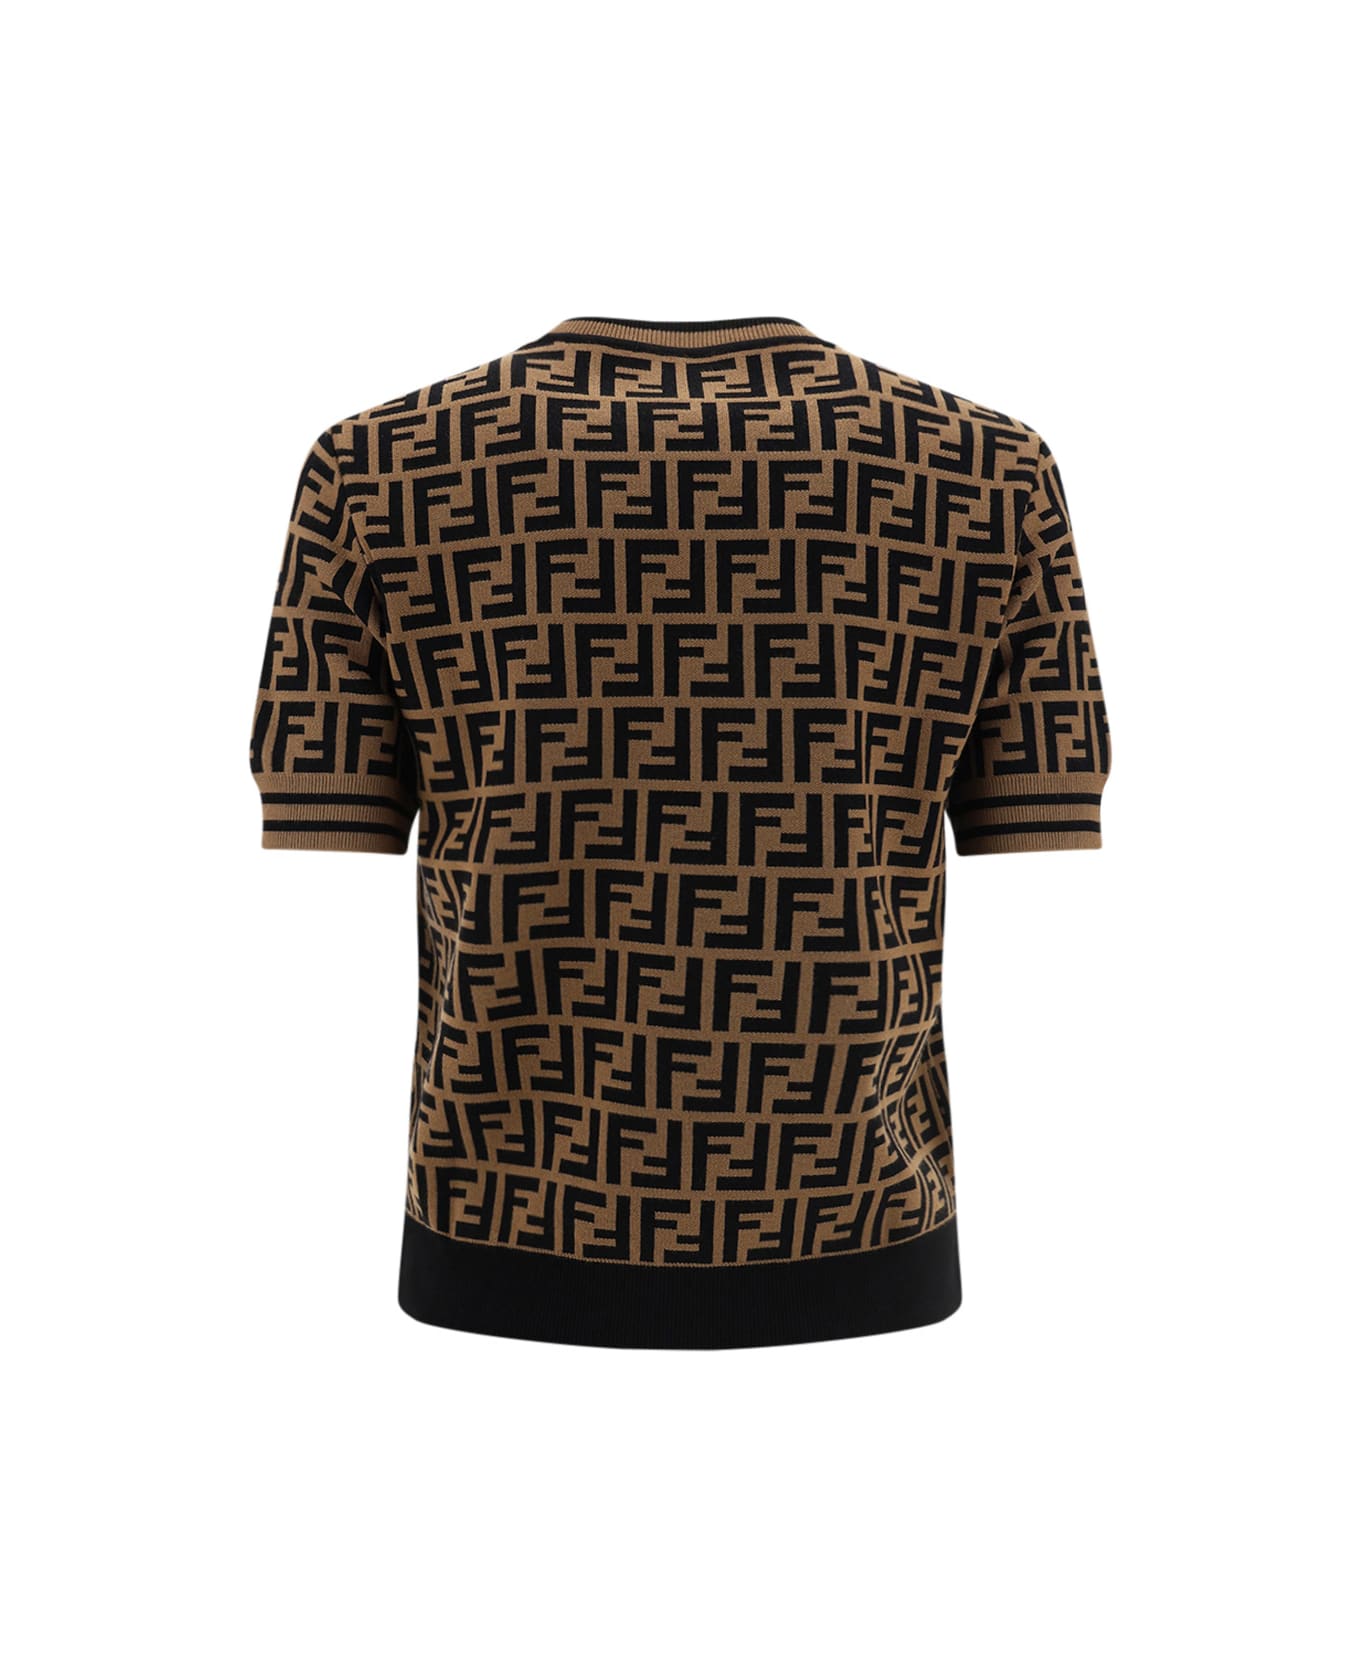 Fendi Short-sleeved Jumper - Brown Tシャツ